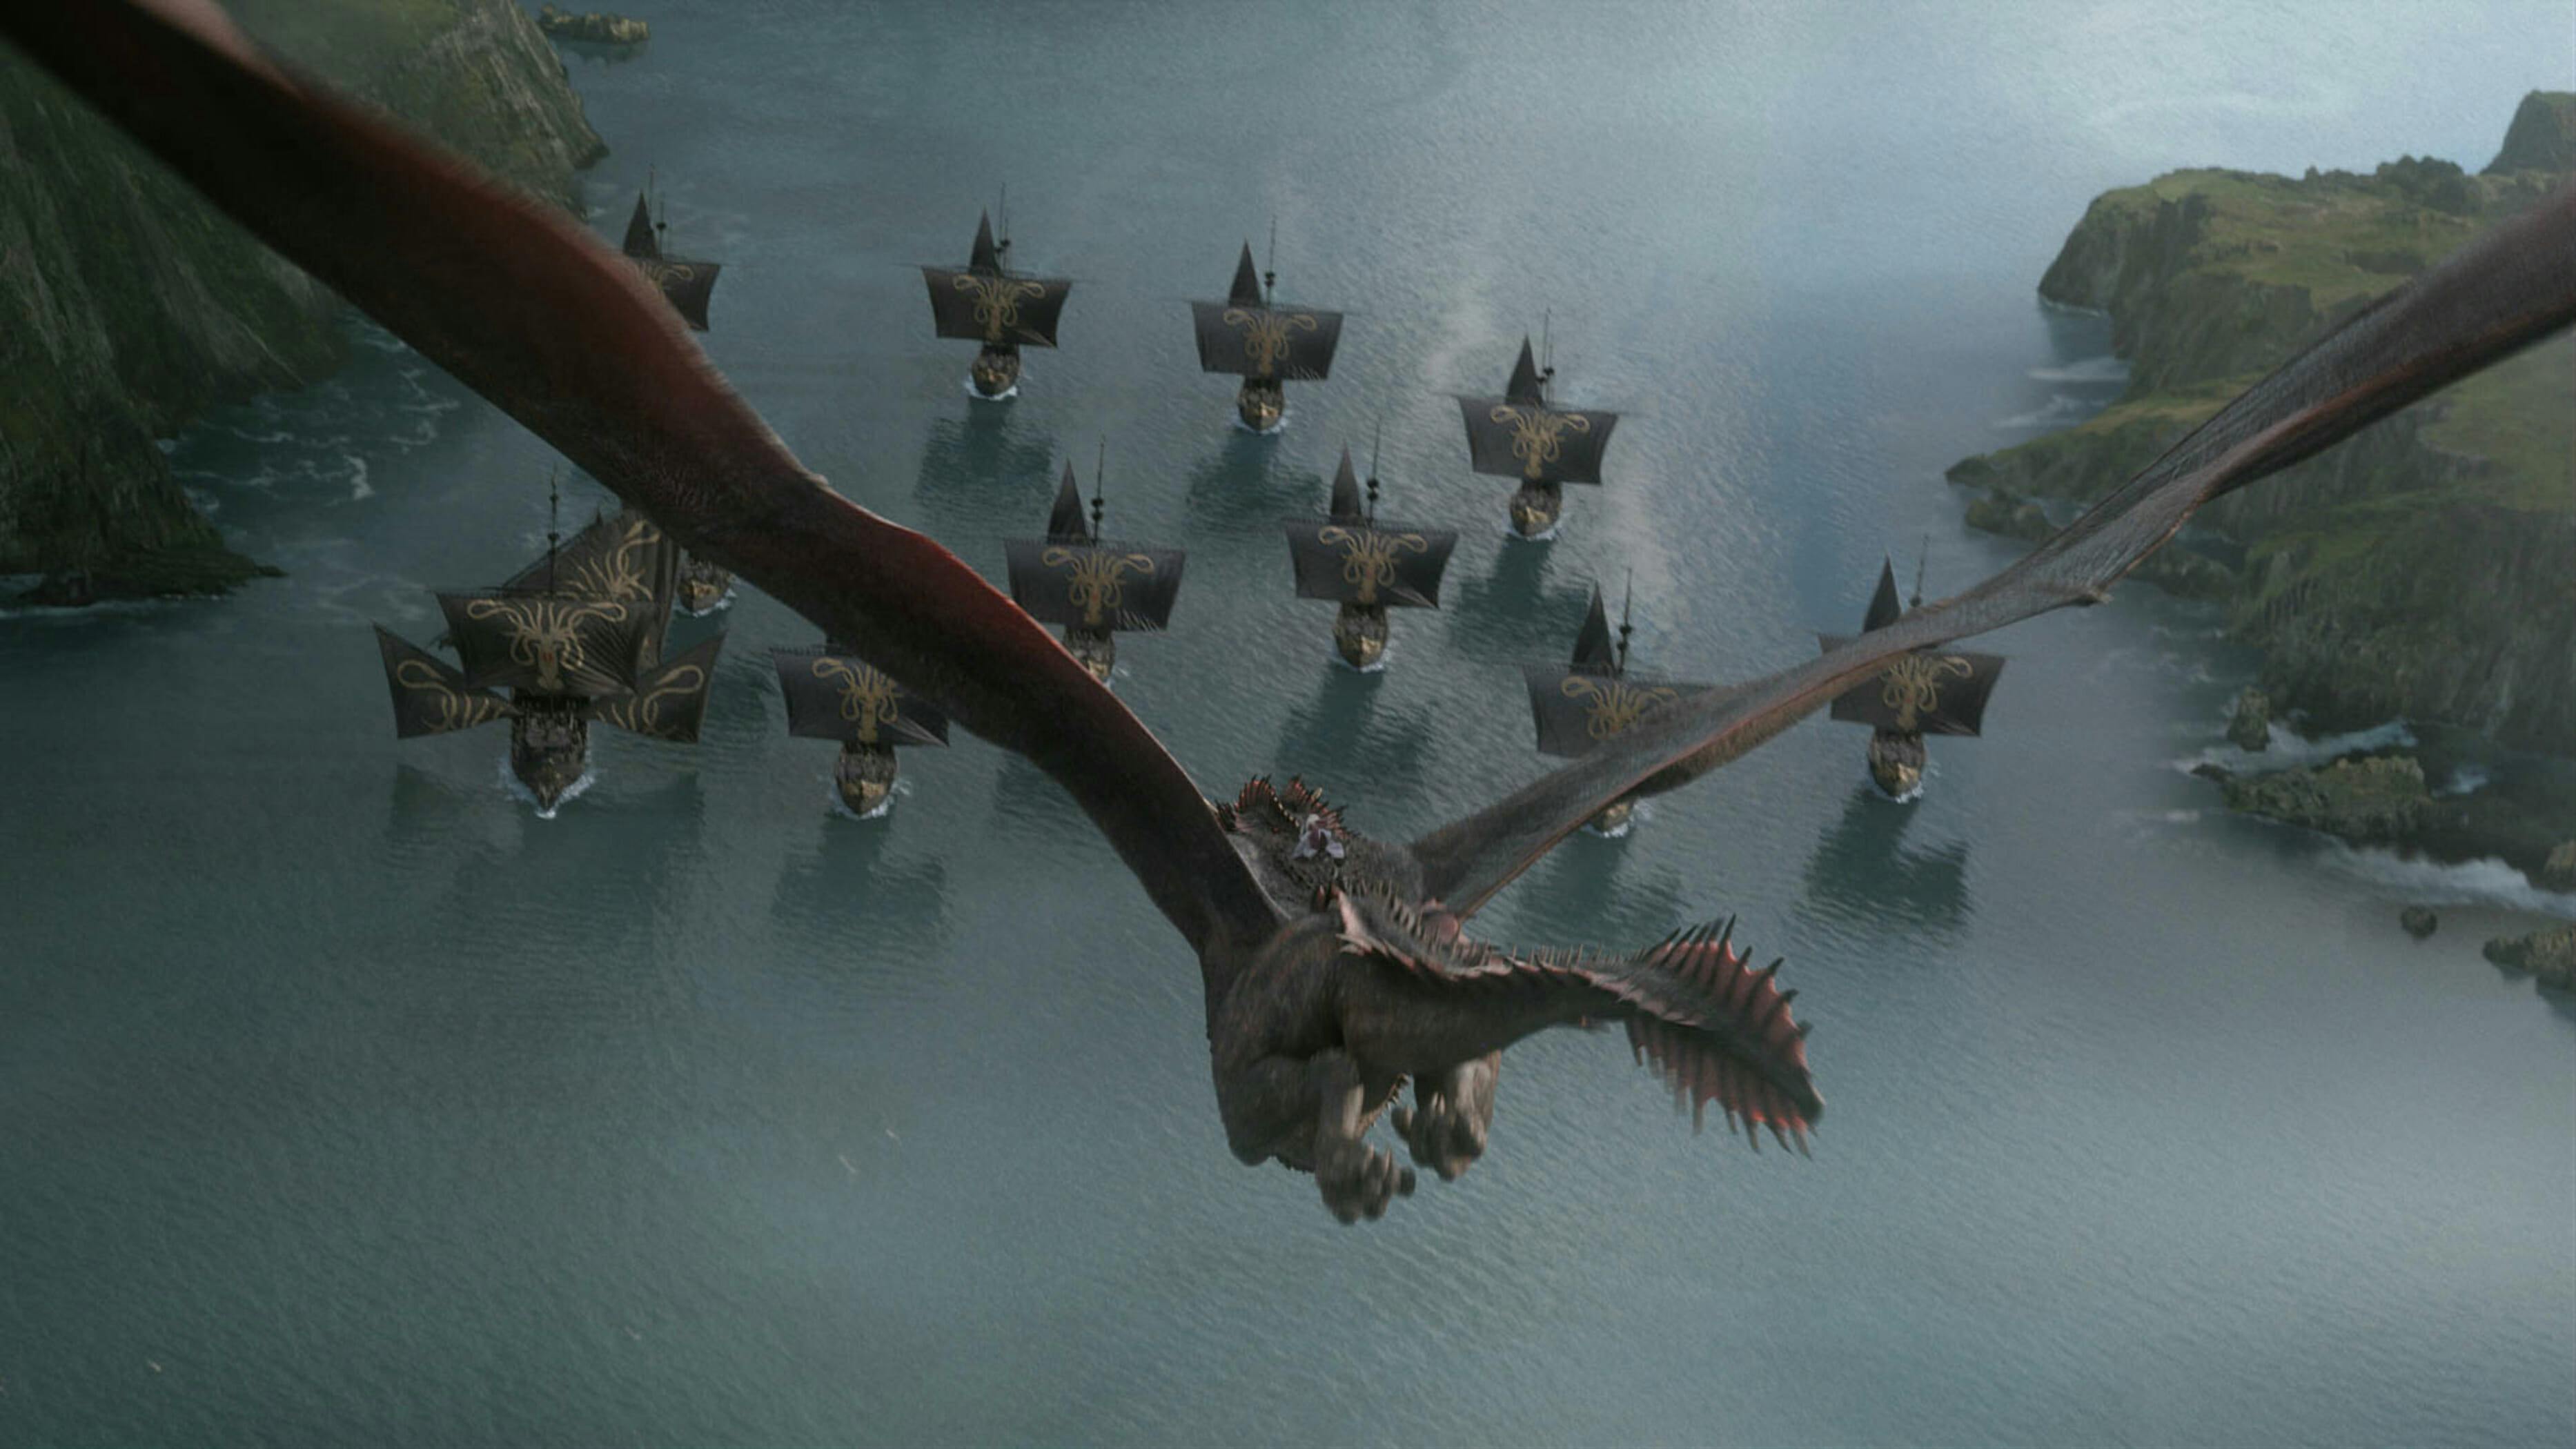 Game of Thrones armies - Drogon